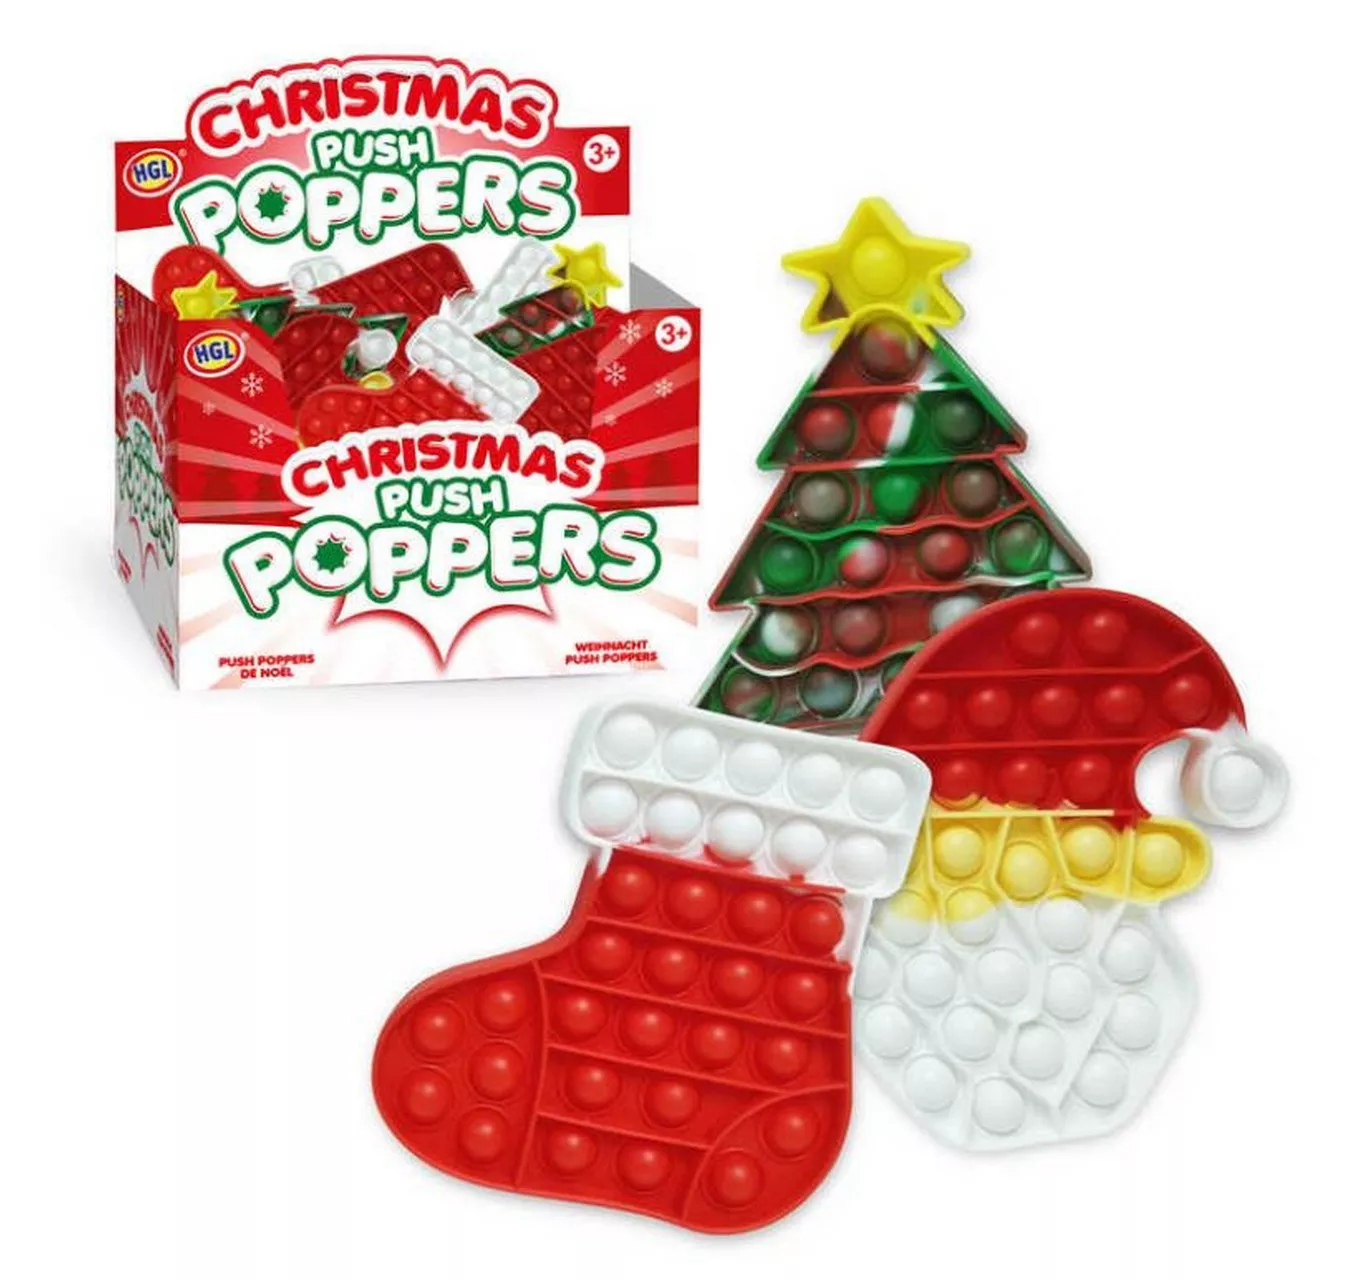 Christmas Push Popper - Each